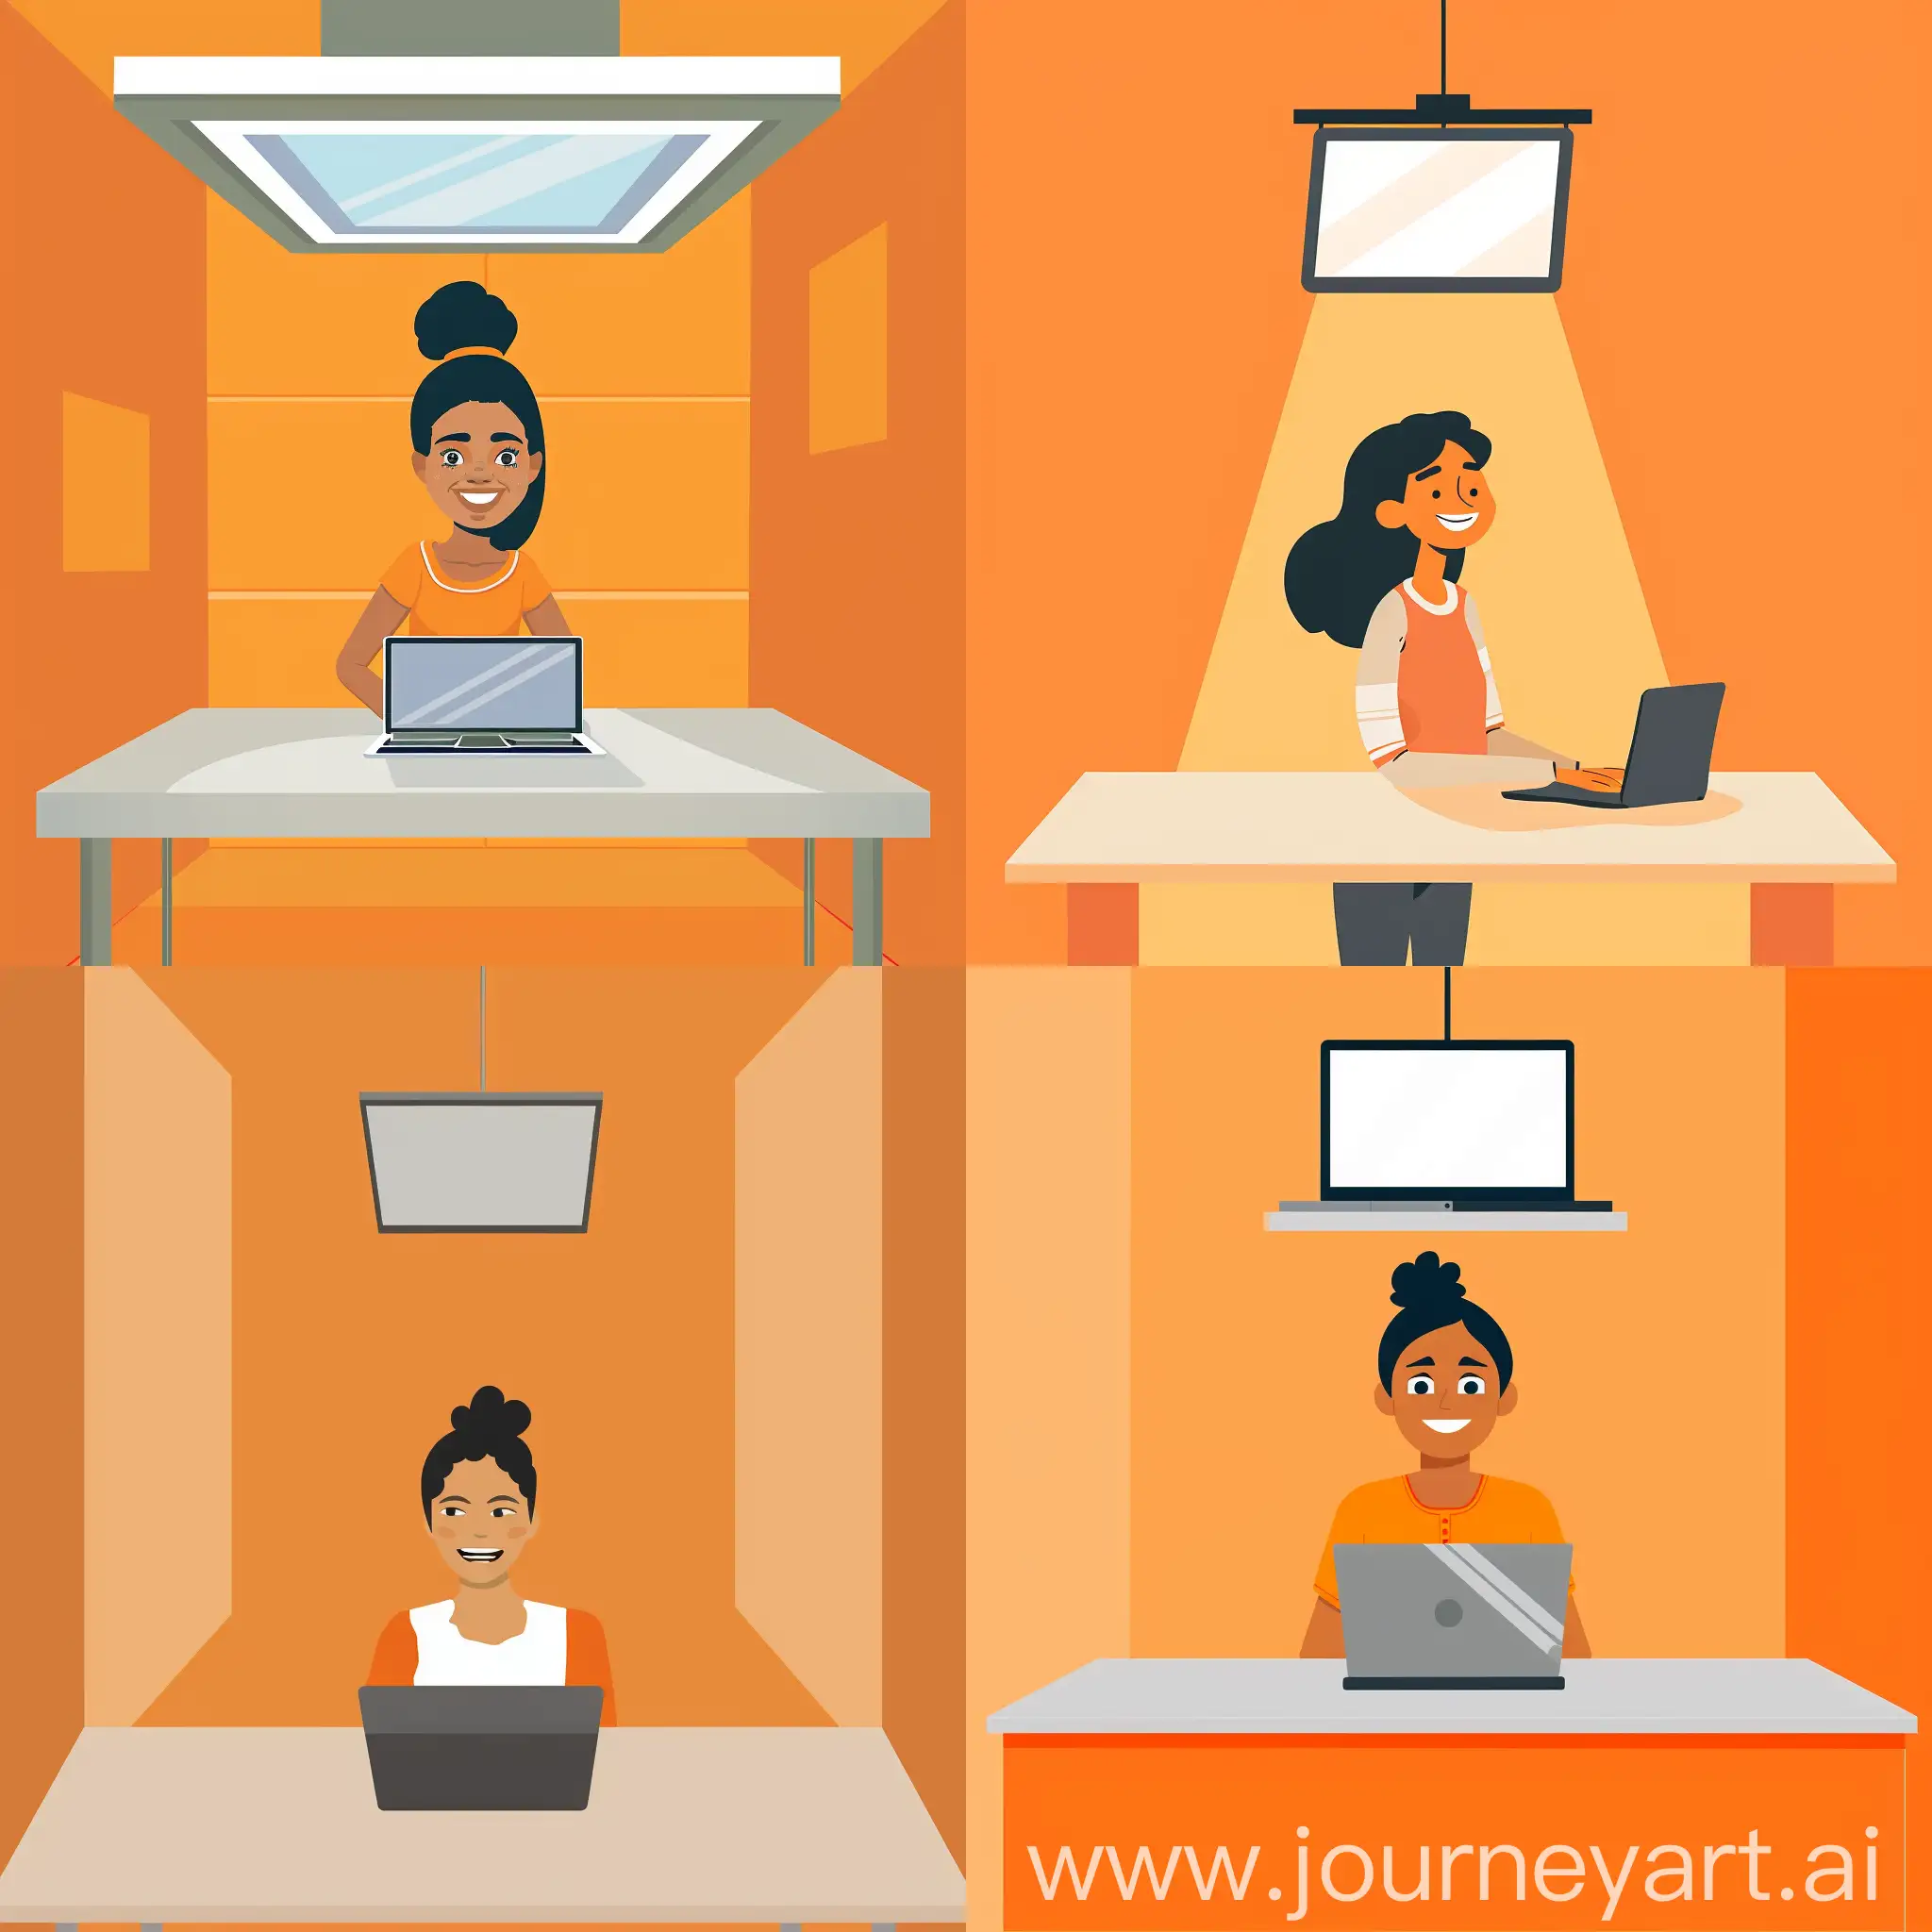 Joyful-Woman-Working-on-Laptop-in-Vibrant-Orange-Workspace